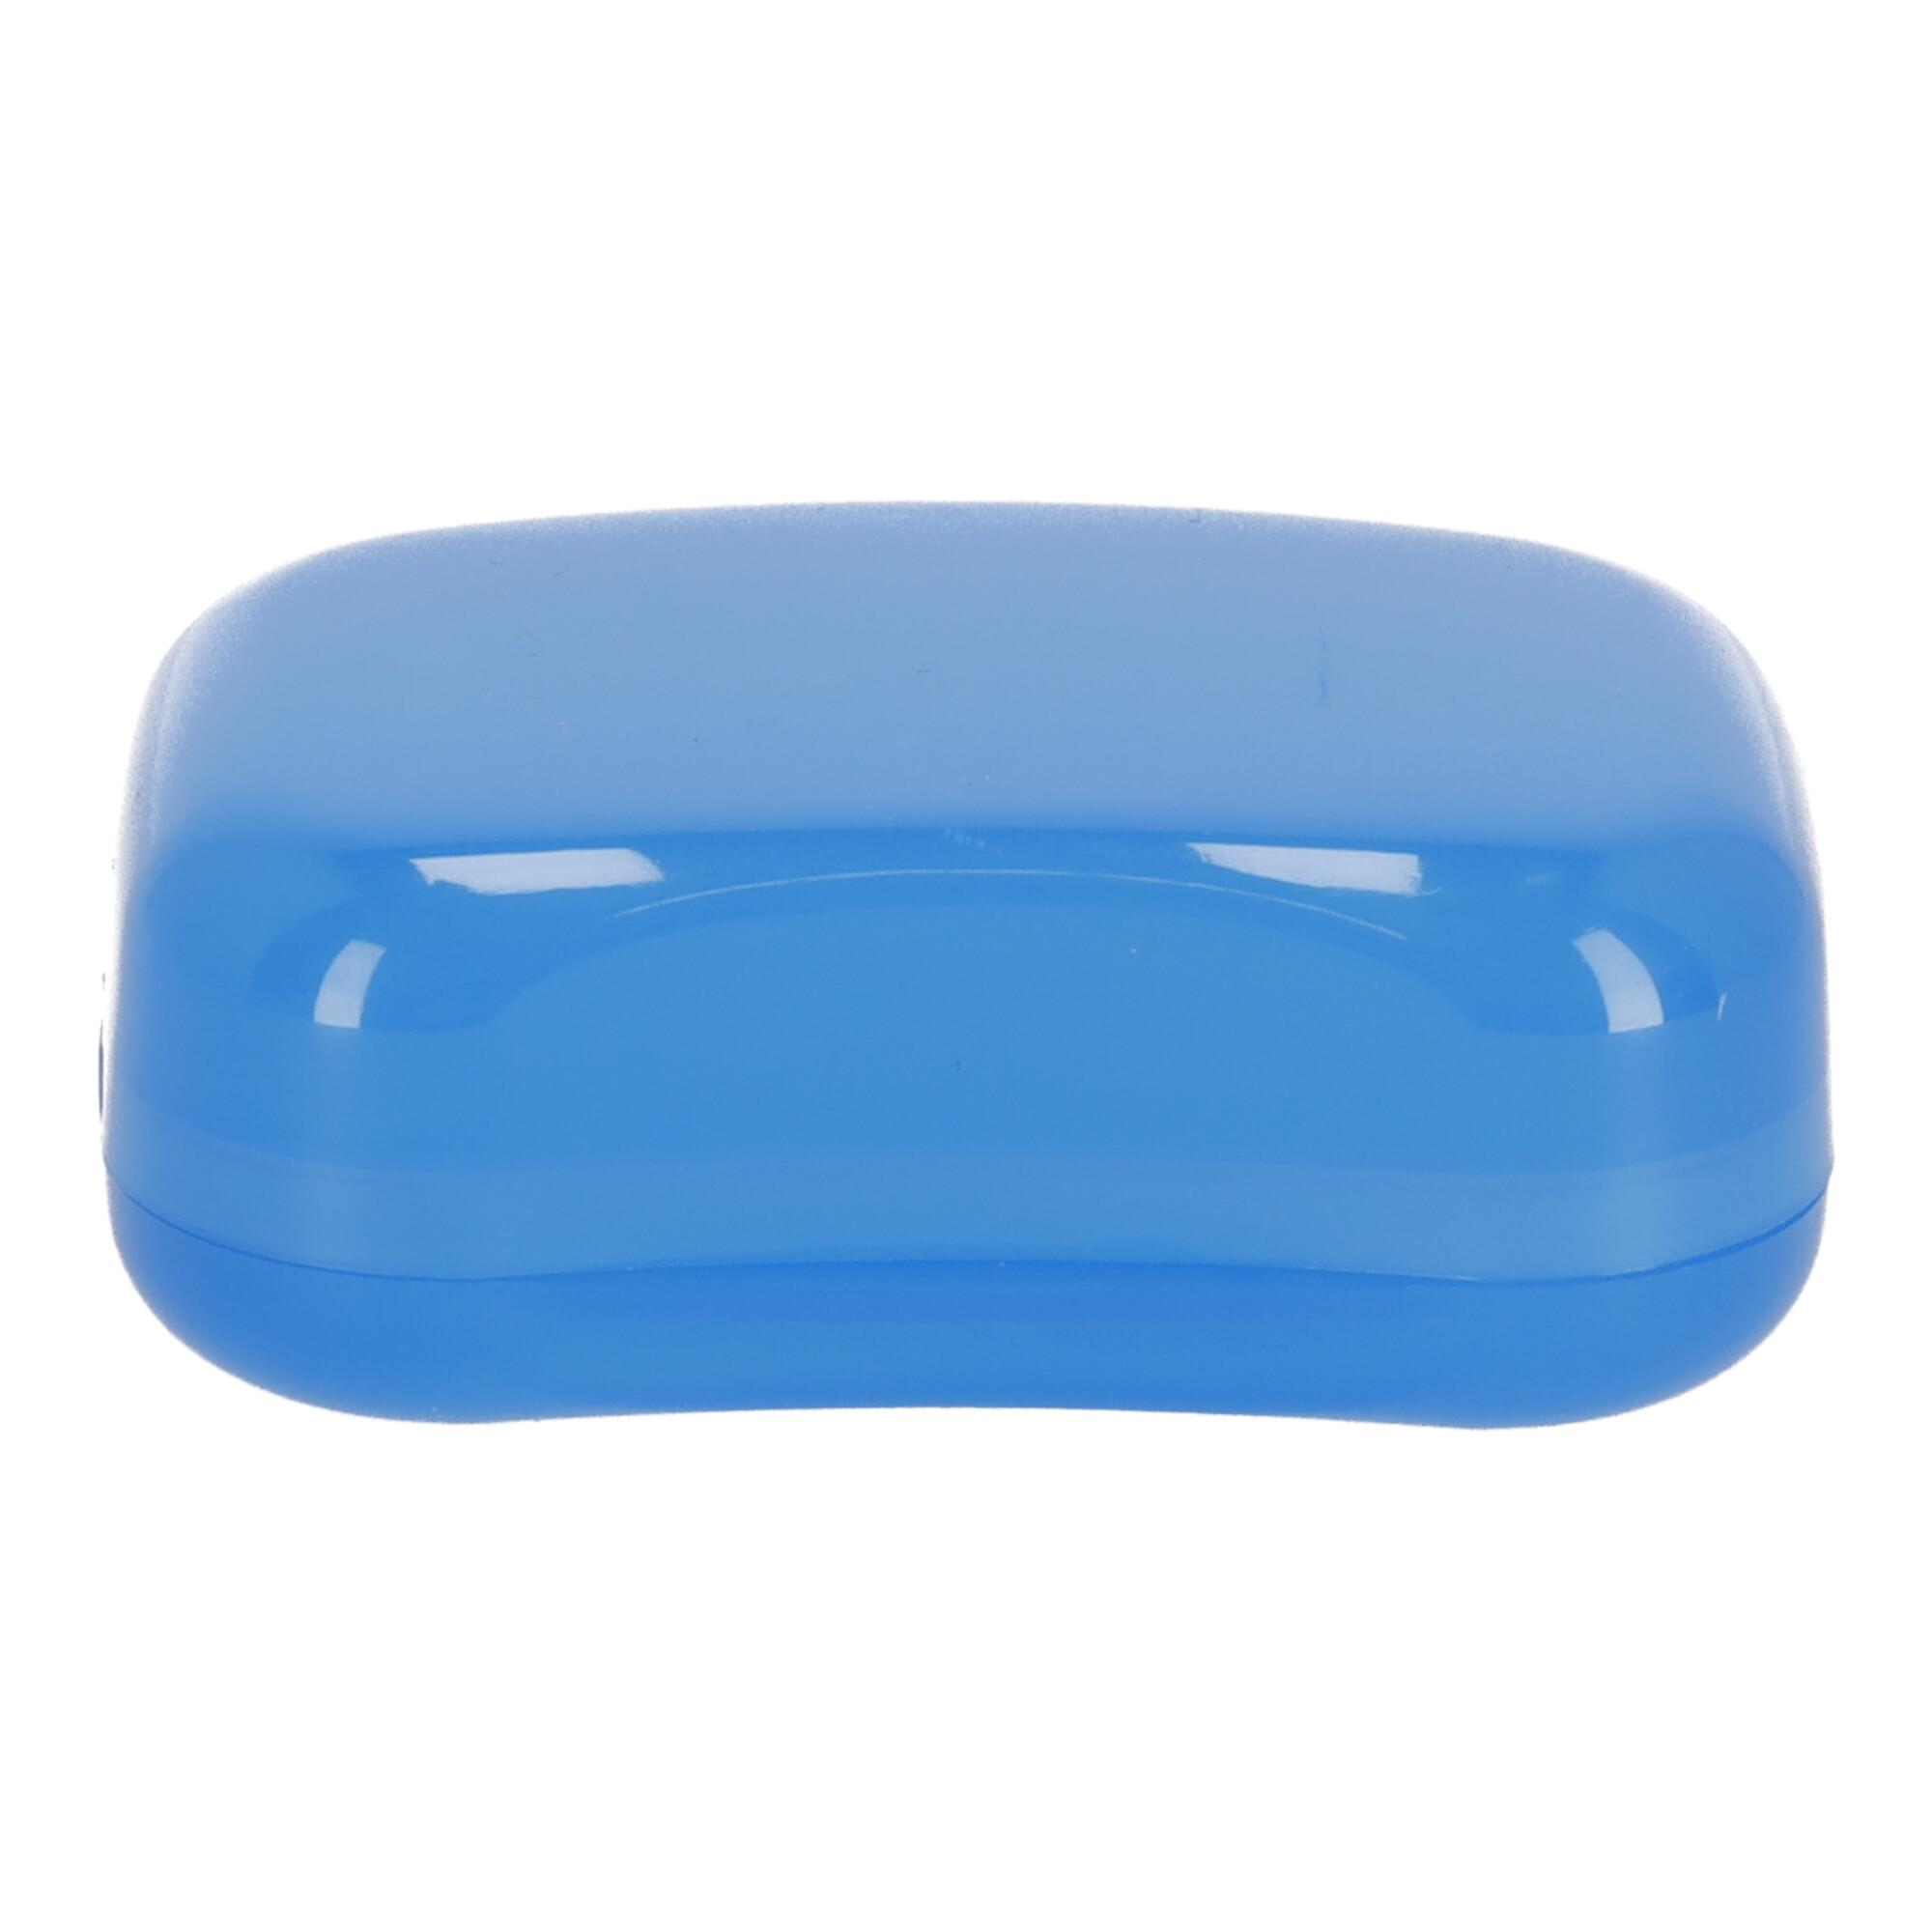 Tourist soap dish, closed plastic soap dish, type III - dark blue